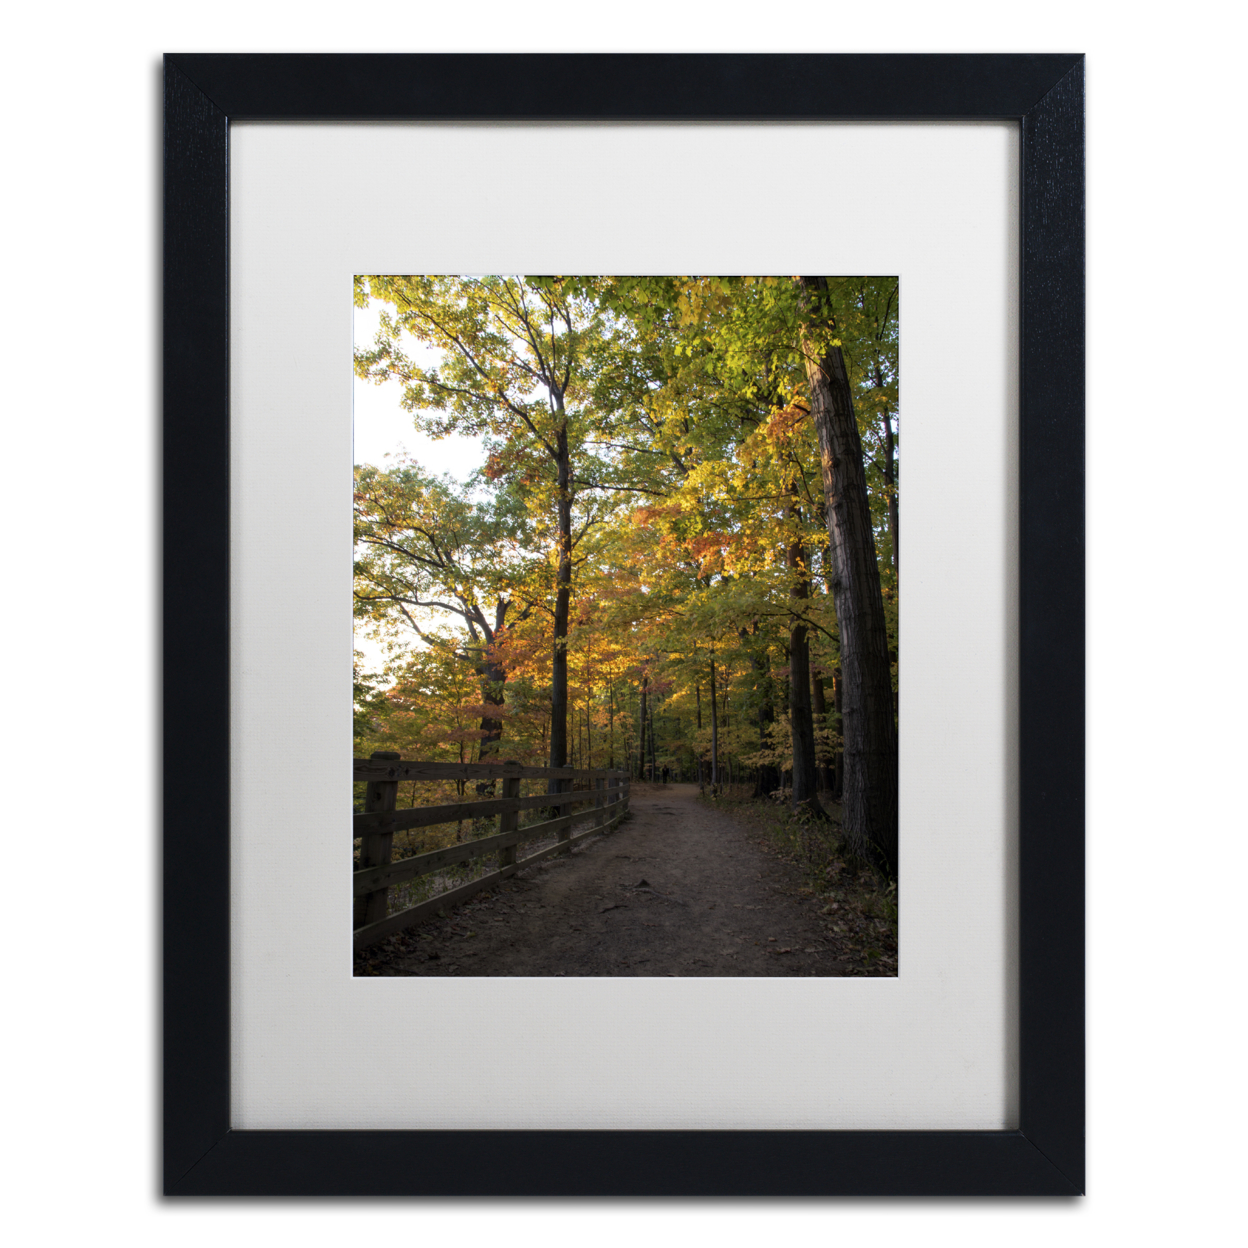 Kurt Shaffer 'Perfect End To An Autumn Day' Black Wooden Framed Art 18 X 22 Inches